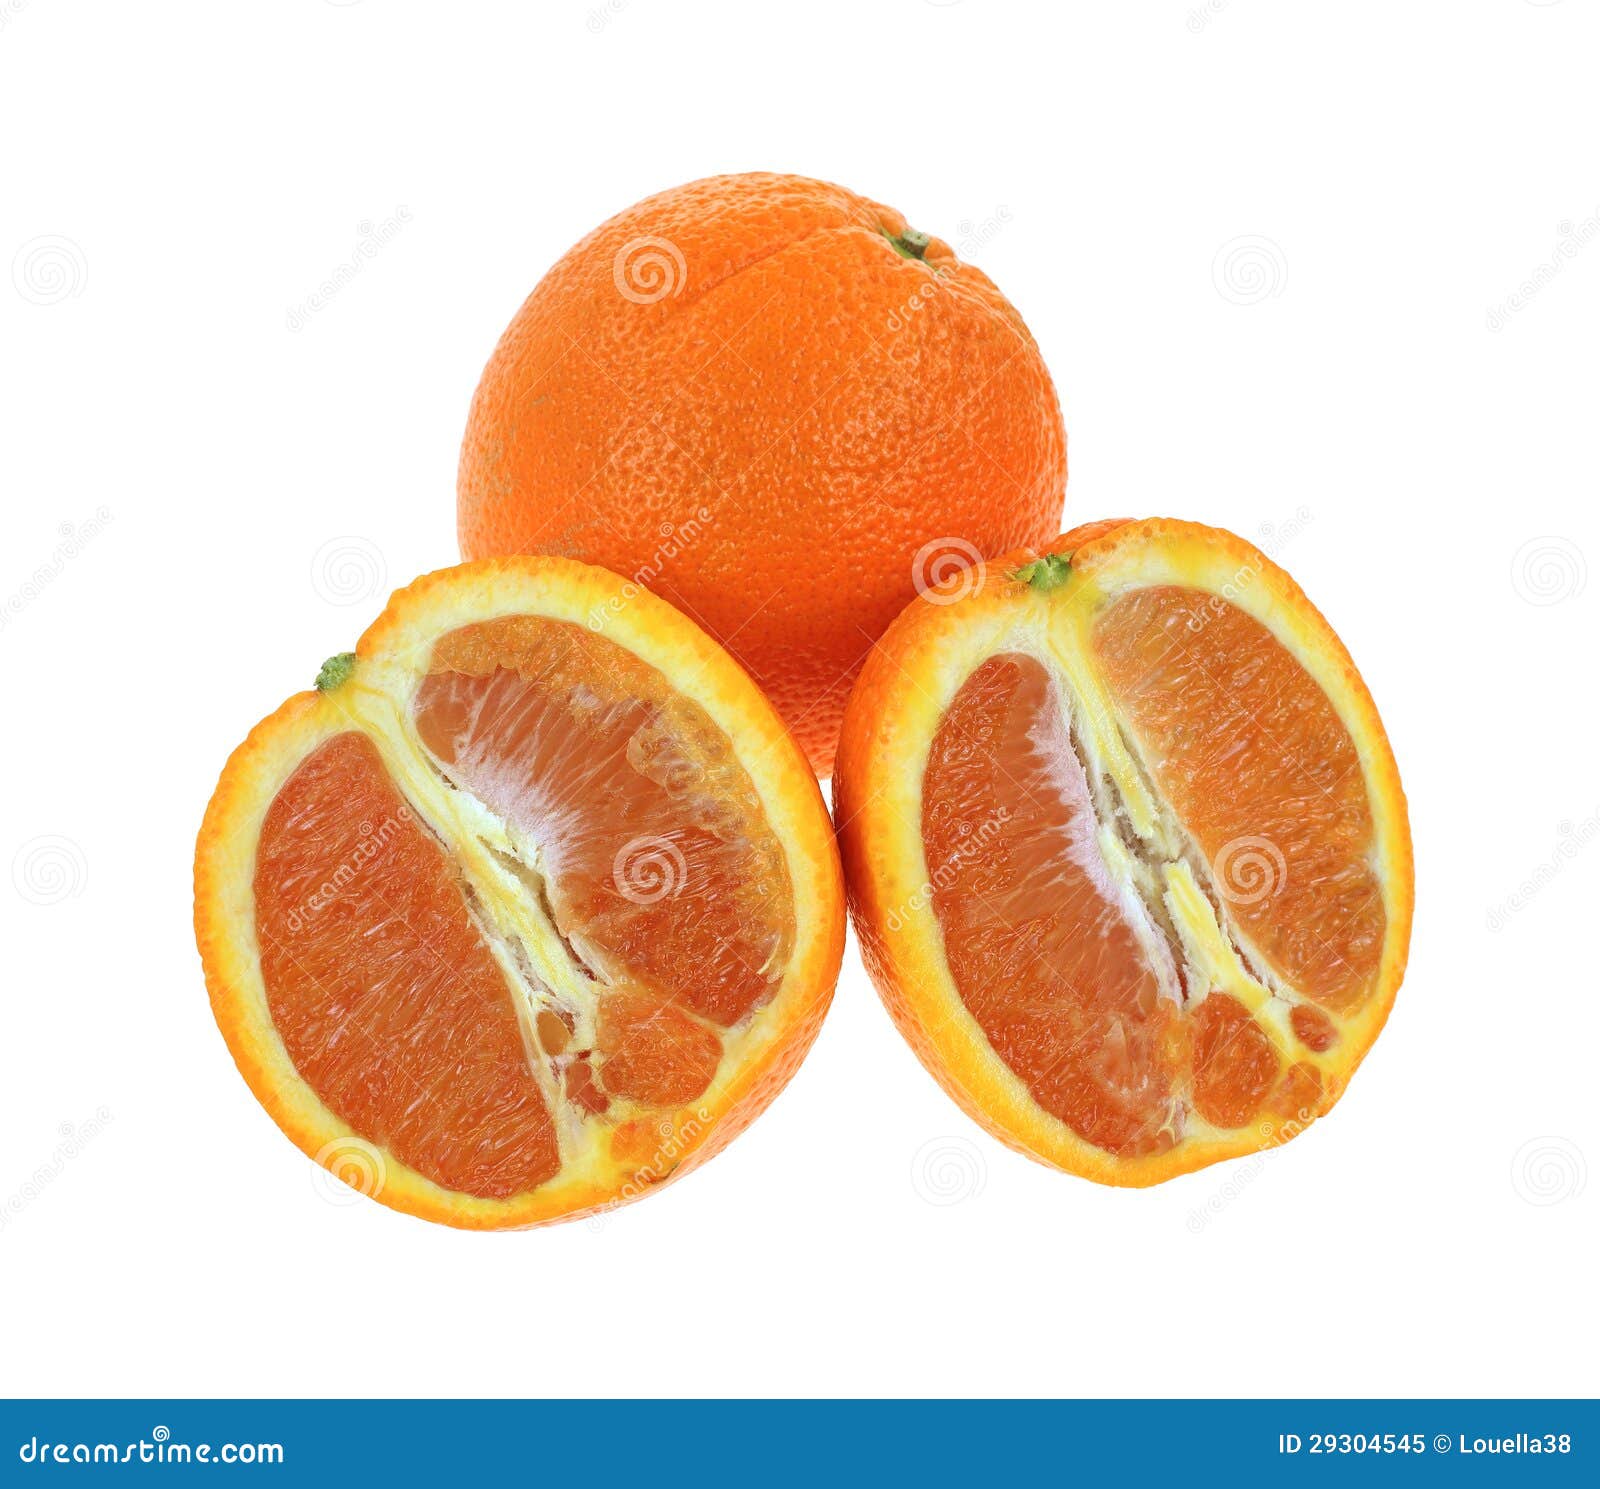 cara cara navel orange whole sliced